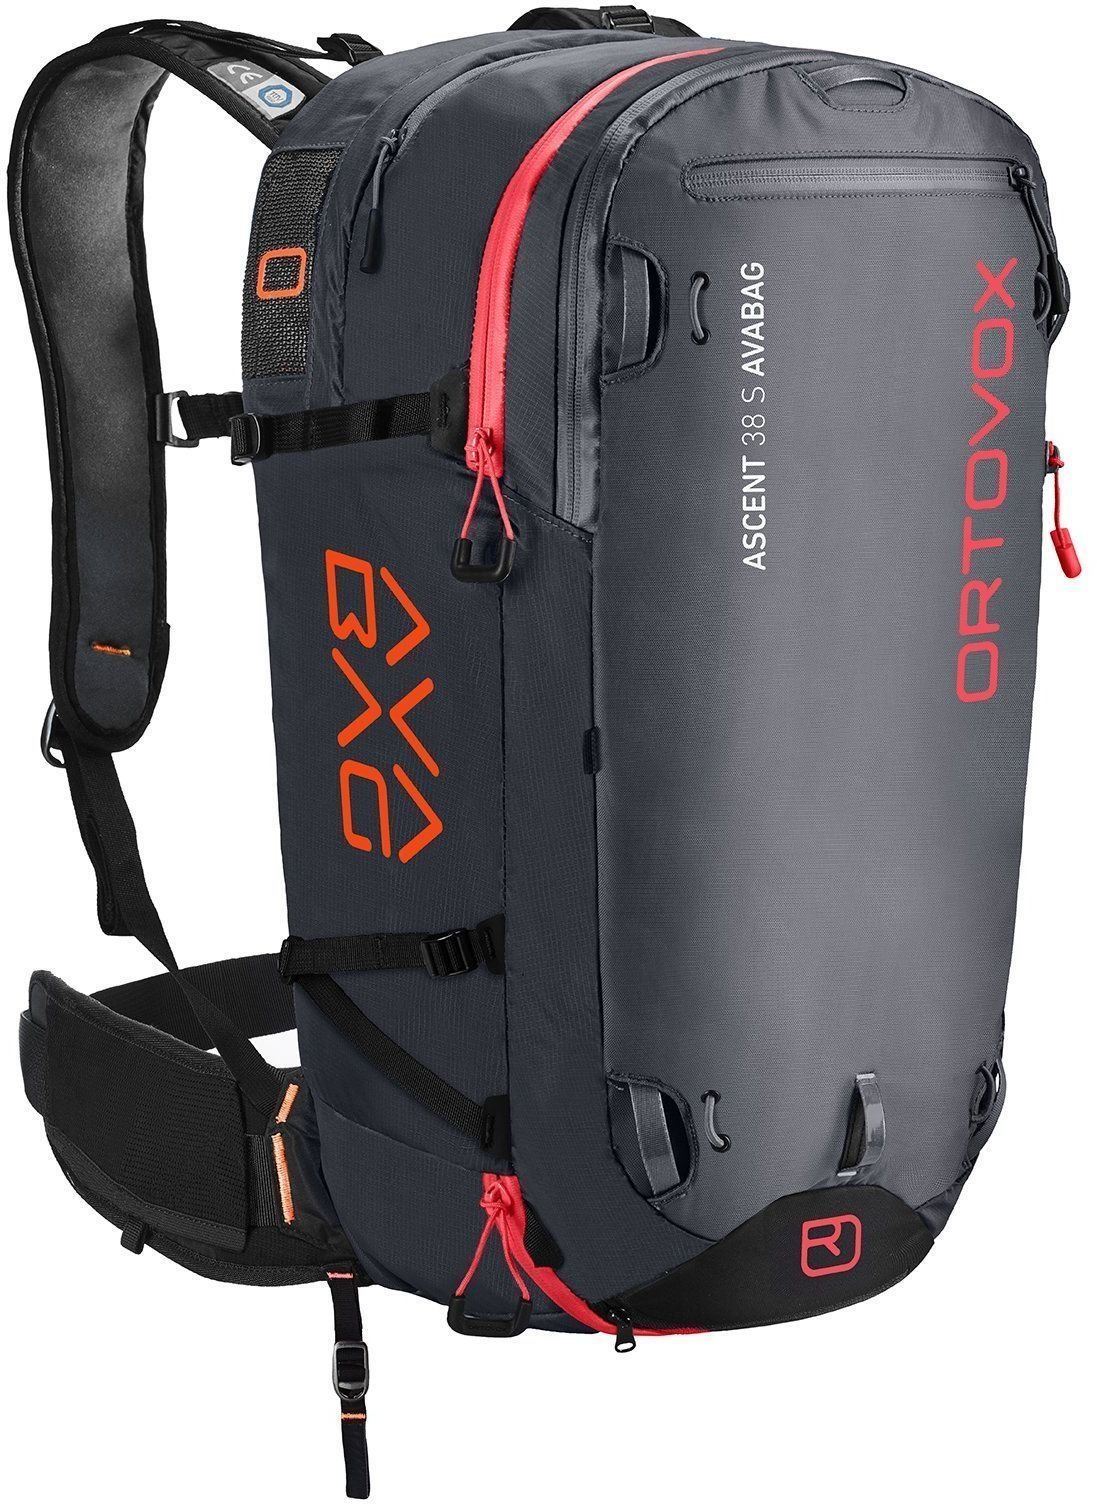 Ski Travel Bag Ortovox Ascent 38 S Avabag Kit Black Anthracite Ski Travel Bag